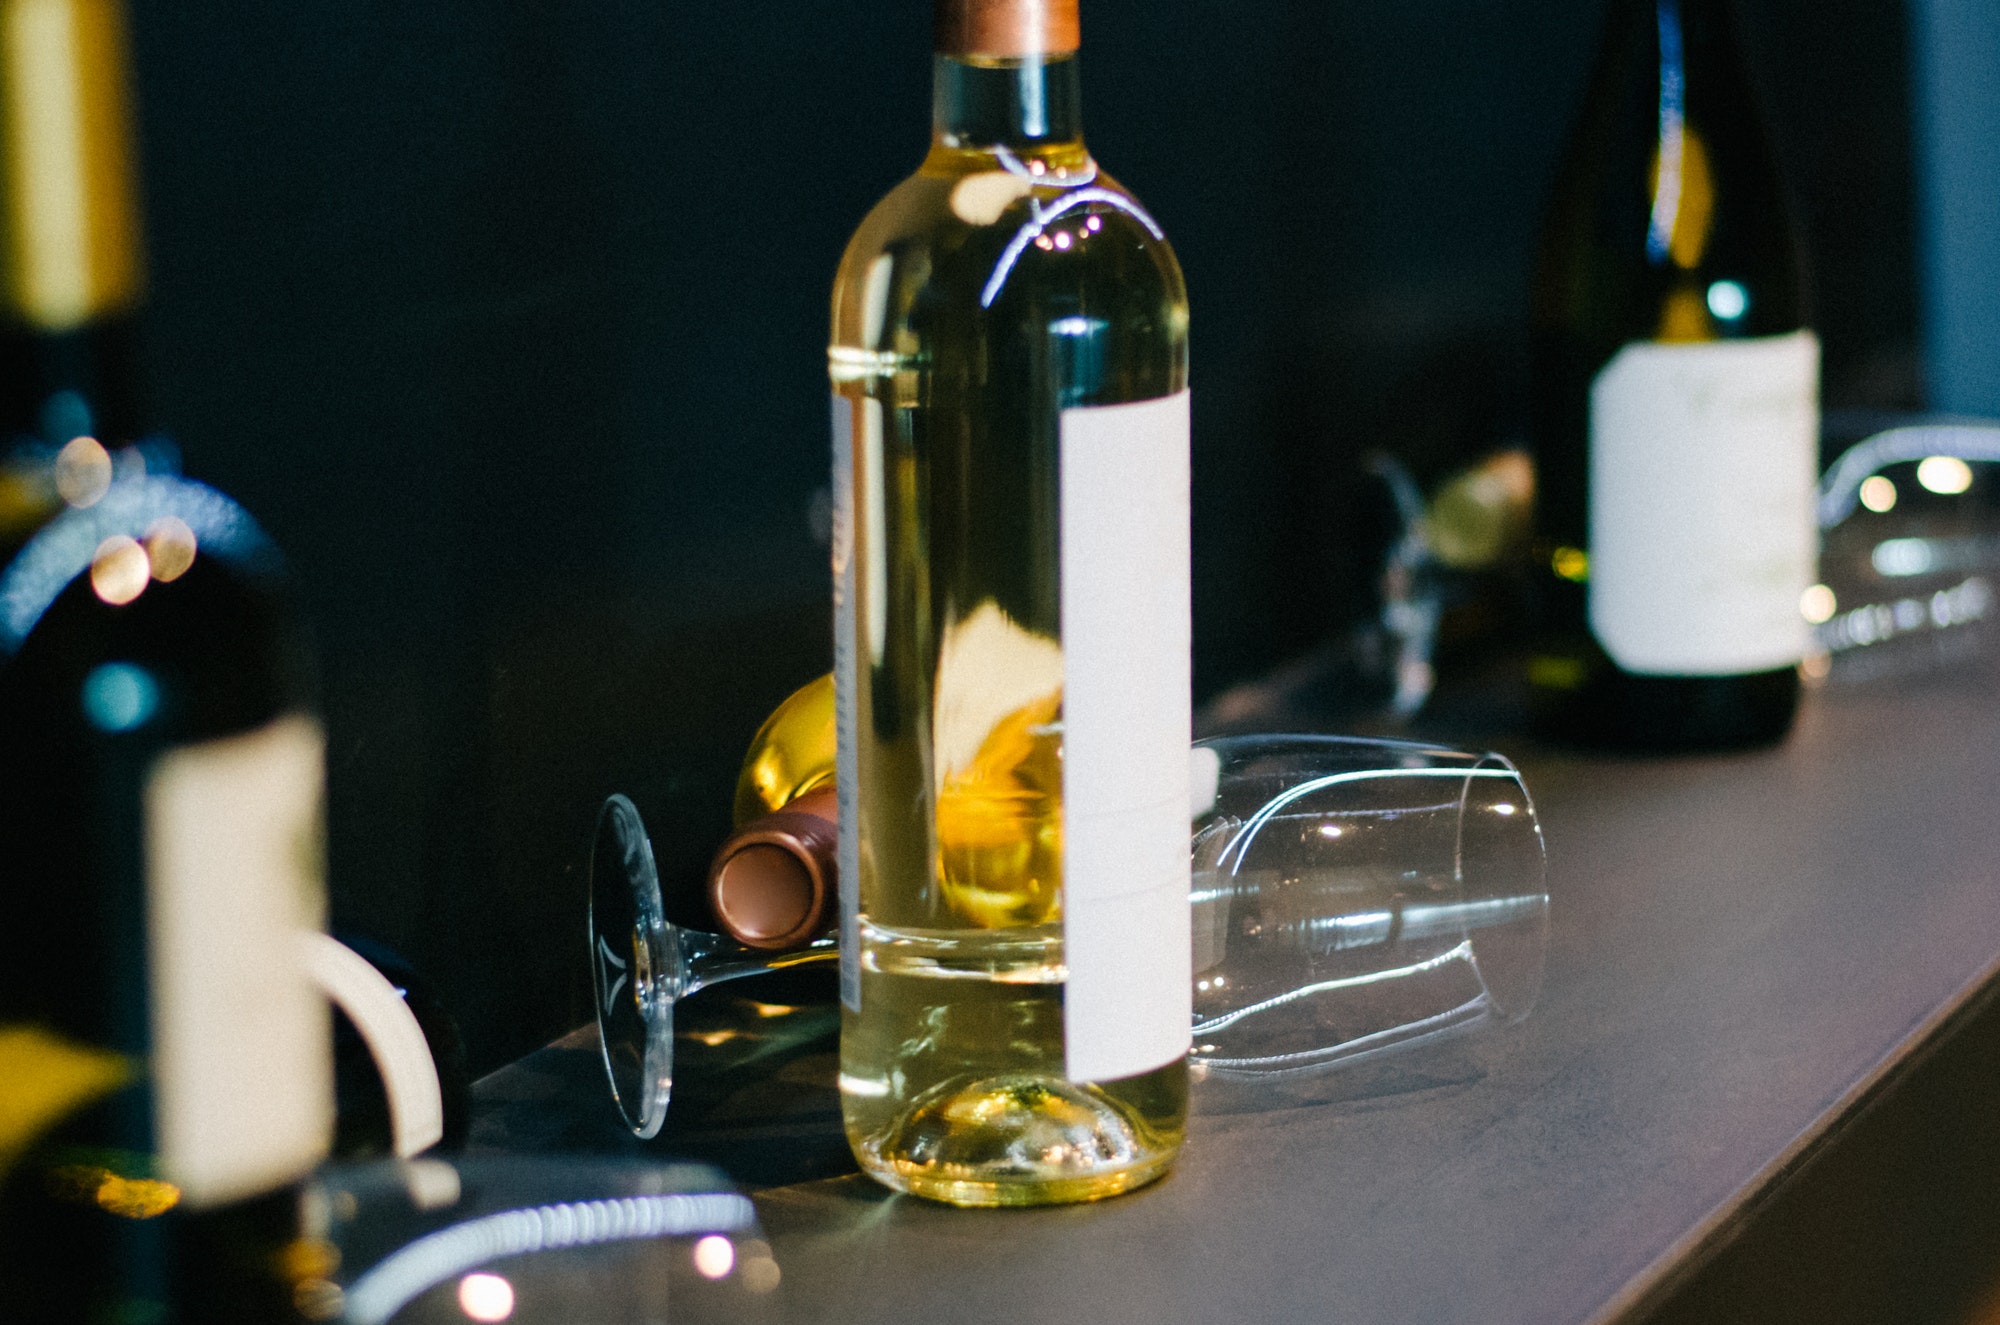 Wine bottles and empty wine glasses